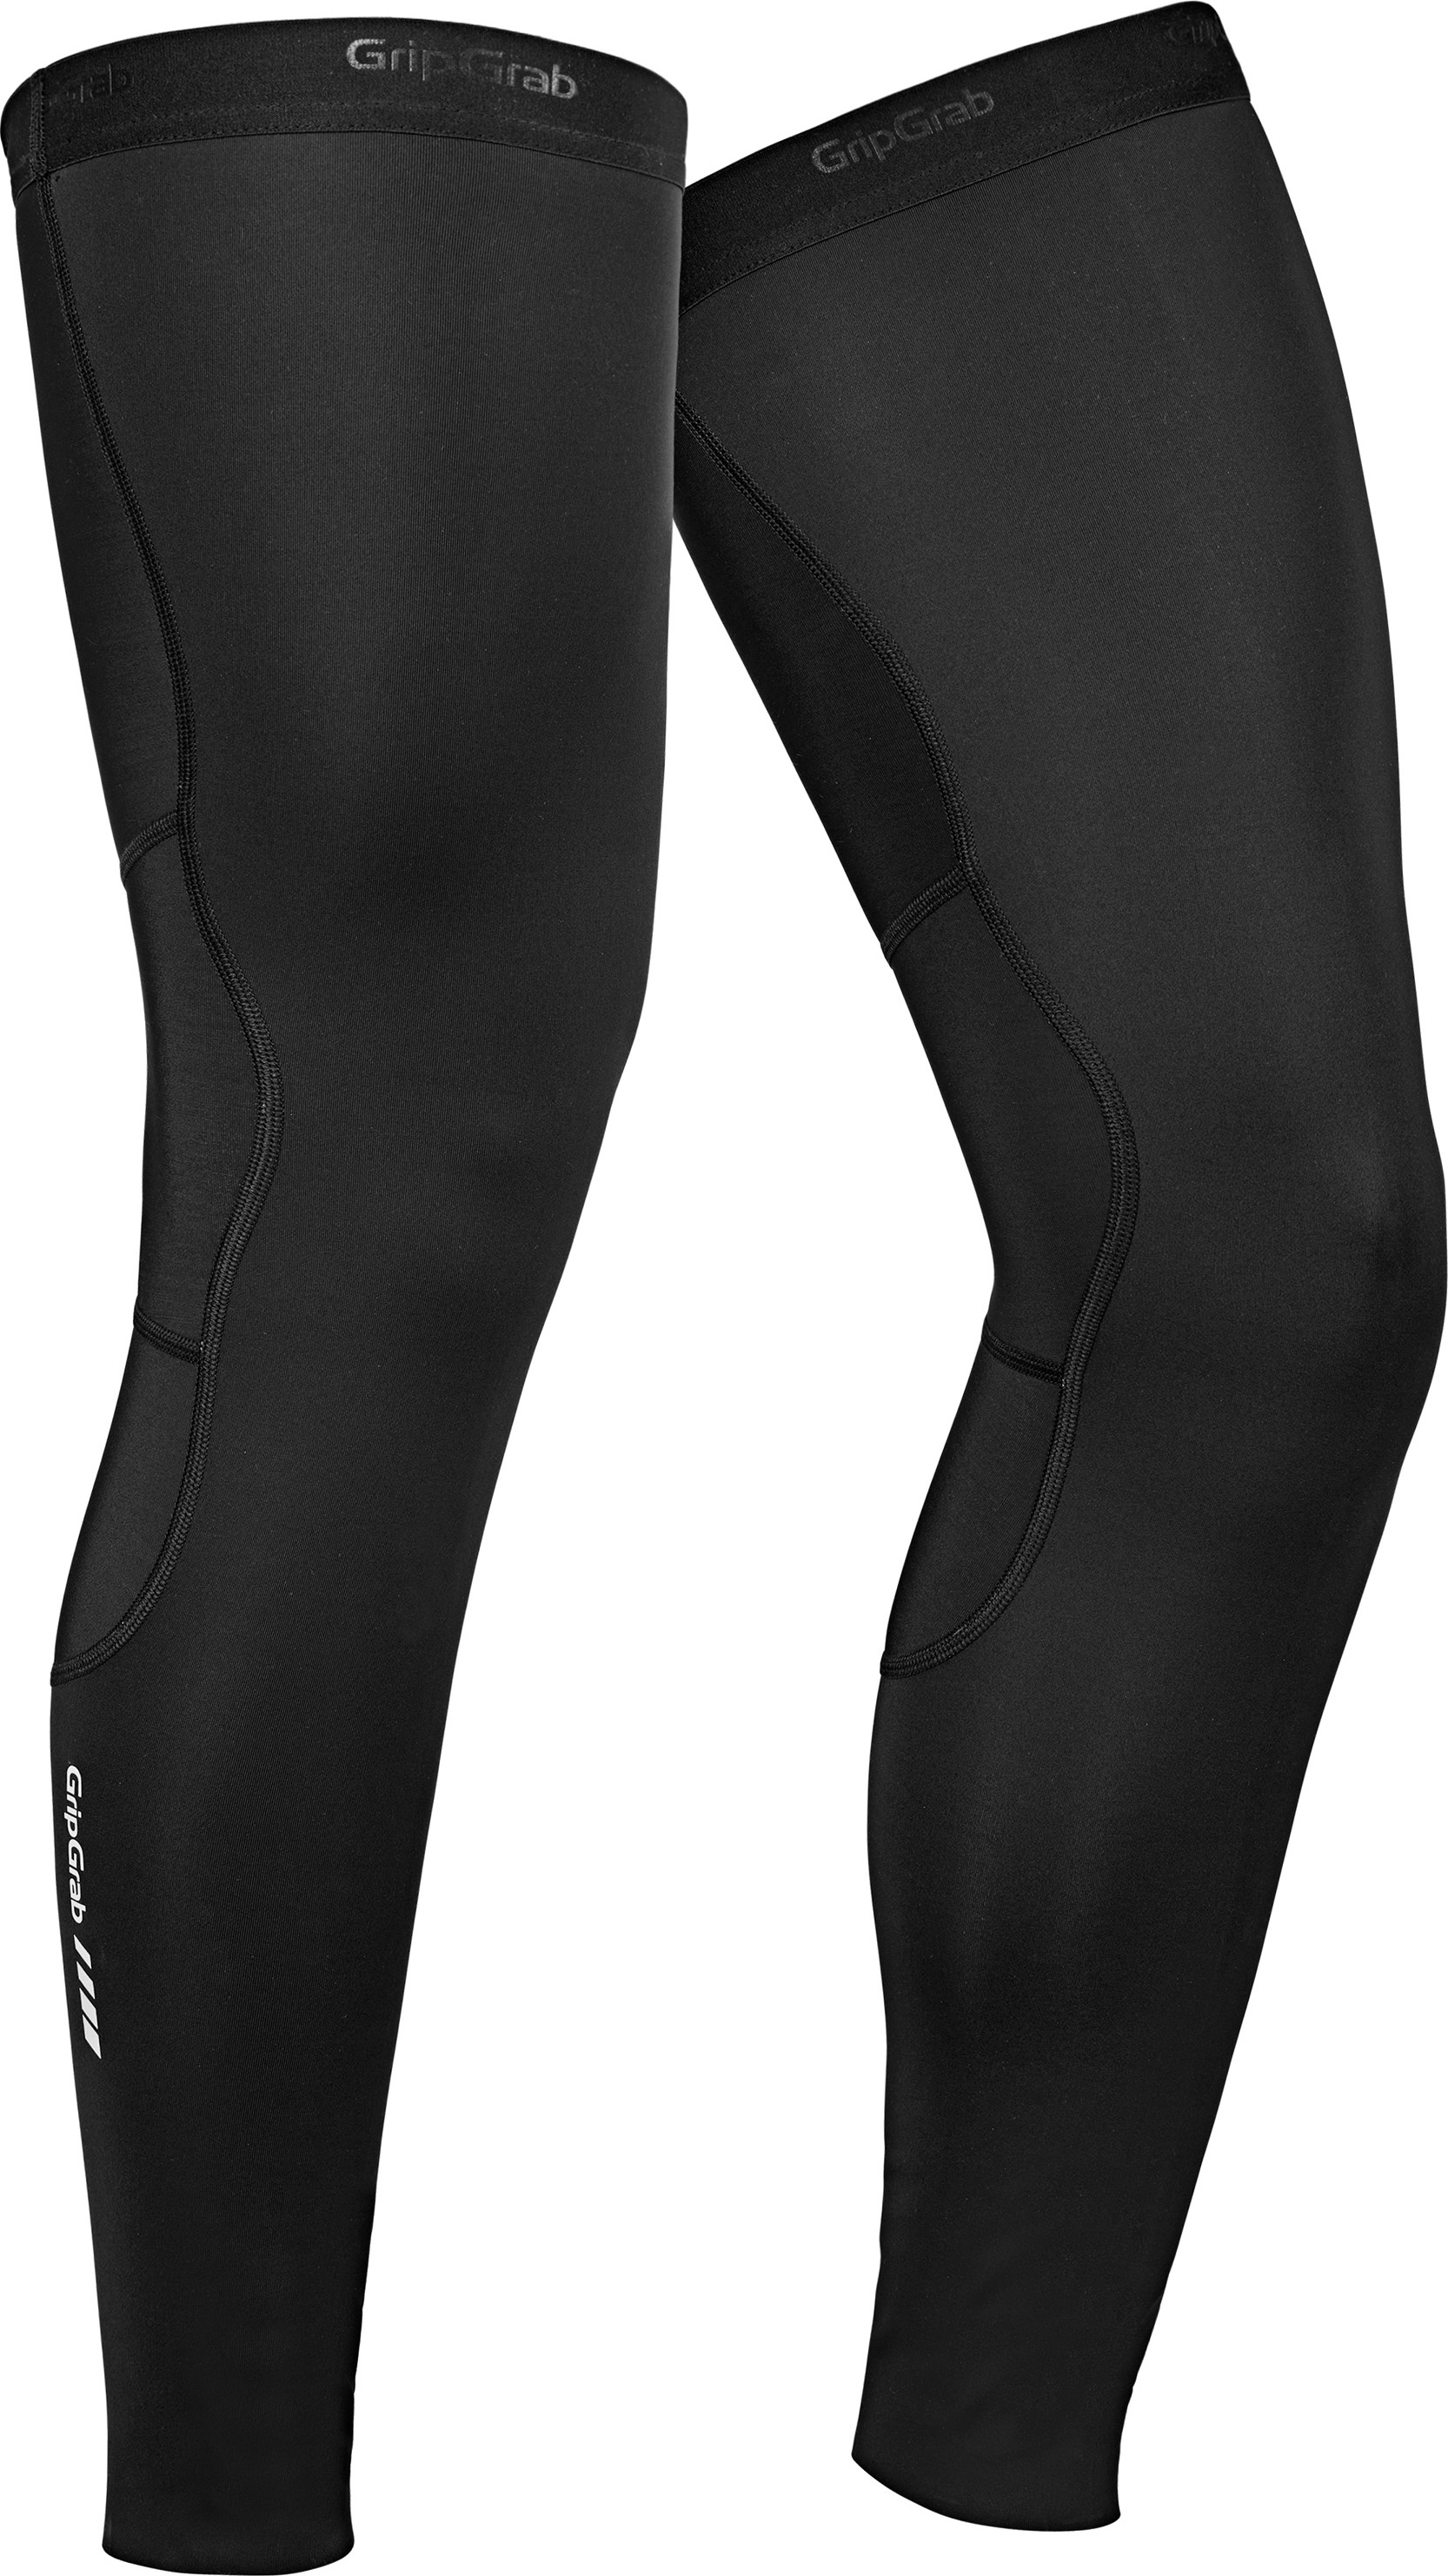 AquaRepel 2 Water-Resistant Leg Warmers Black